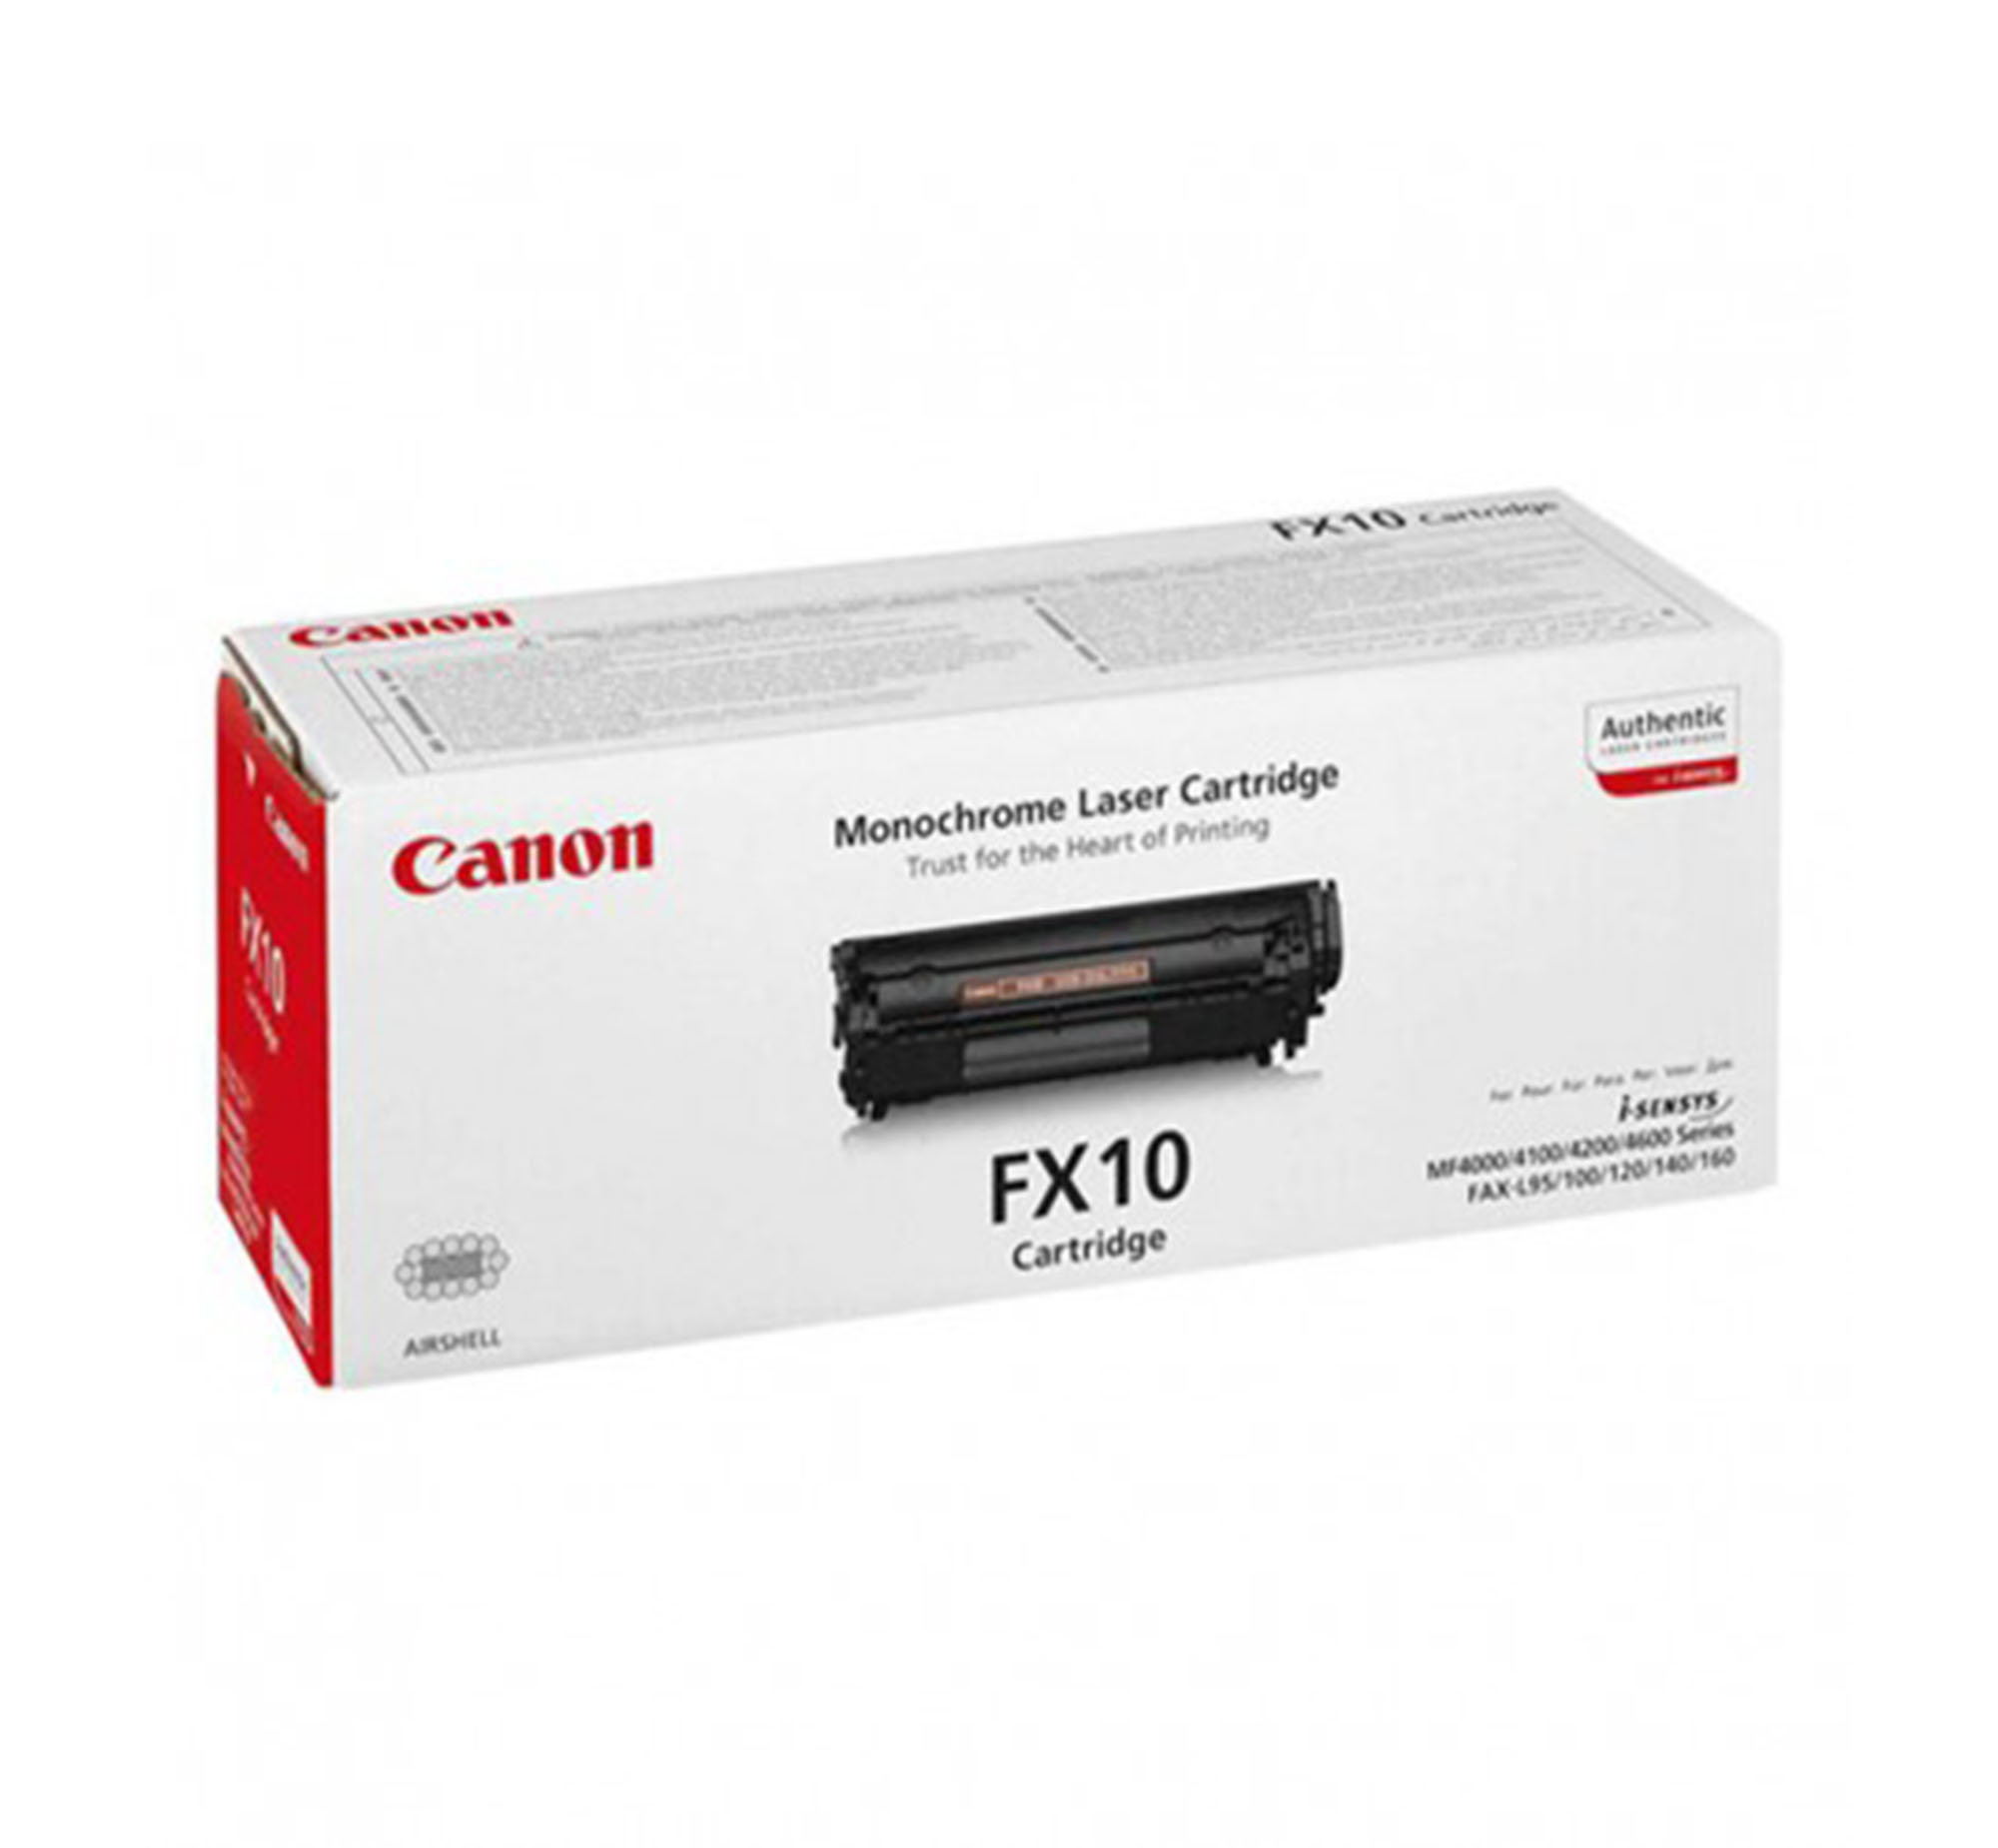 Canon FX10 Toner Cartridge